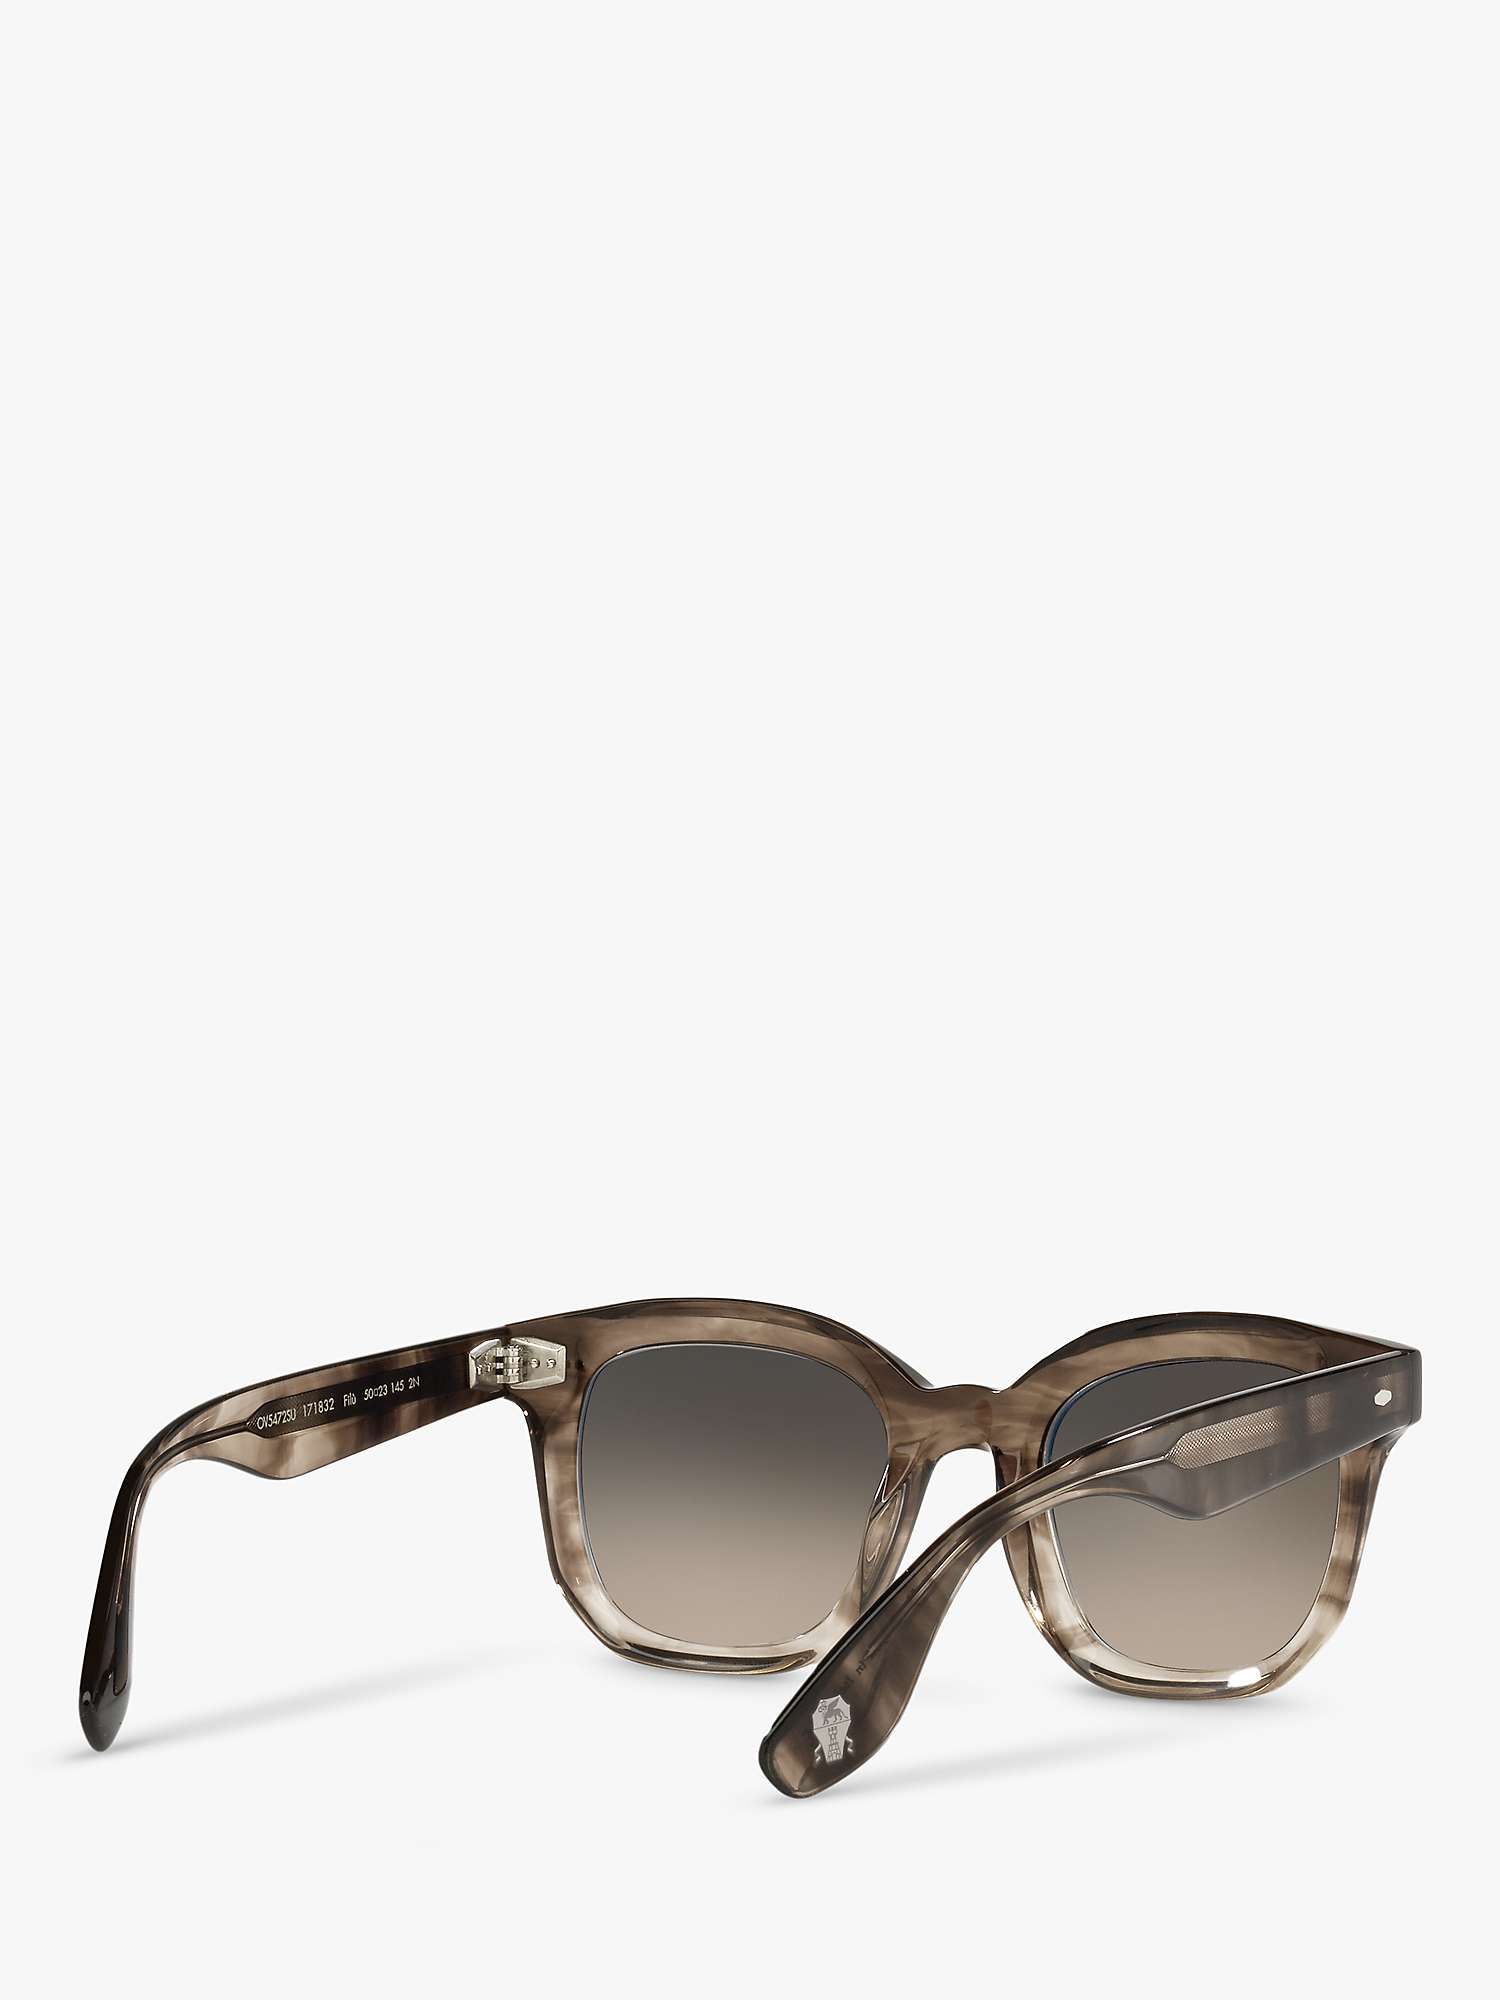 Buy Oliver Peoples OV5472SU Unisex Gradient Lens Sunglasses, Taupe Smoke Online at johnlewis.com